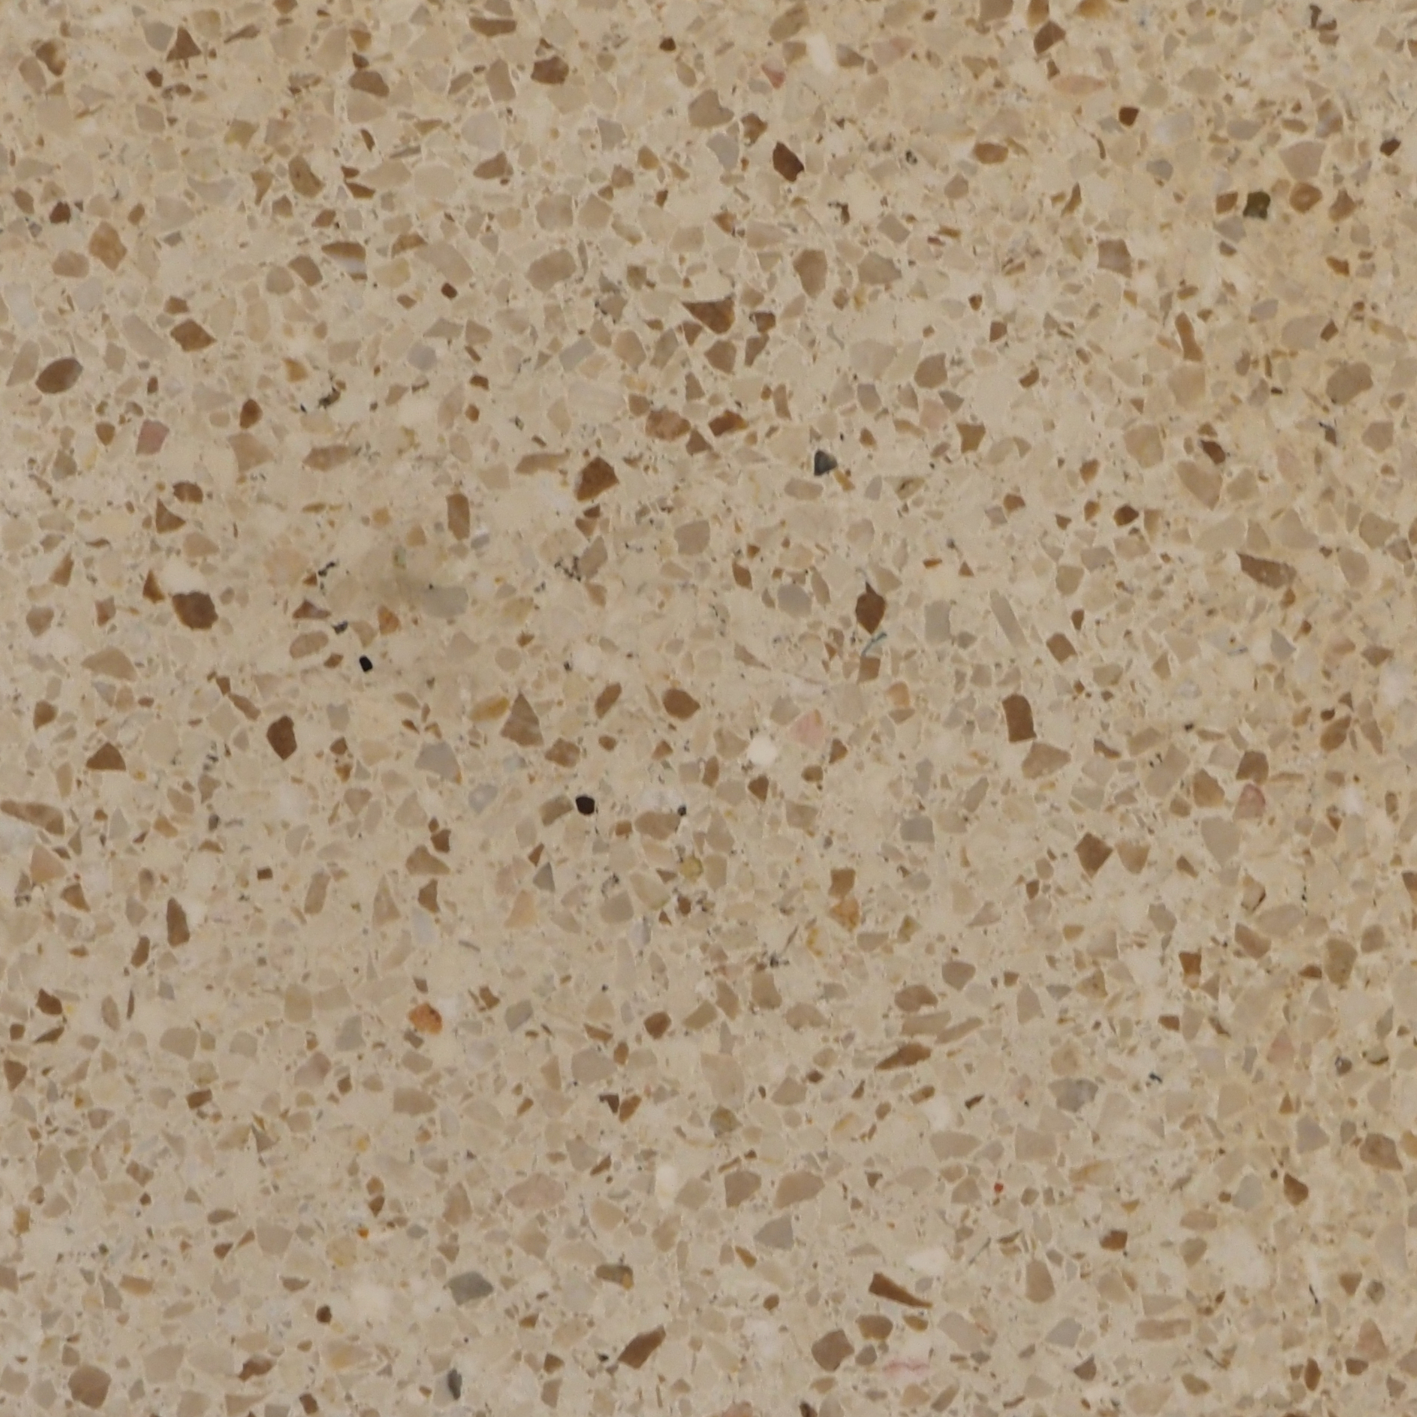 Terrazzo 'Castino' floor tiles (30 x 30 cm) - Sold per pallet